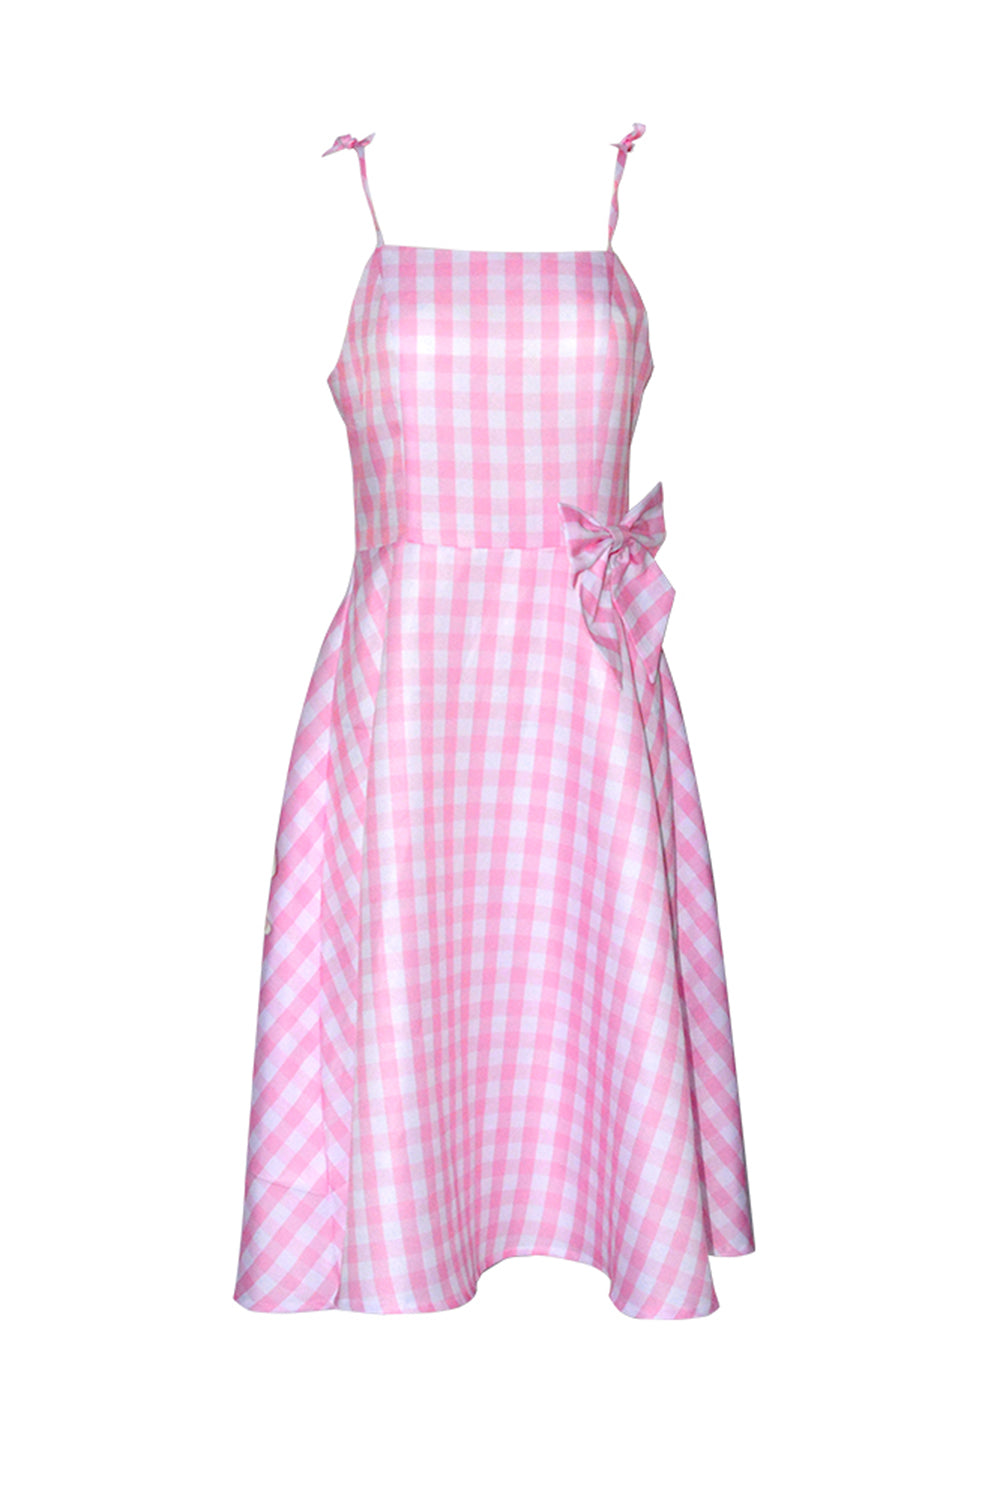 Pink Plaid Pin Up 1950s Dress Accessory Set